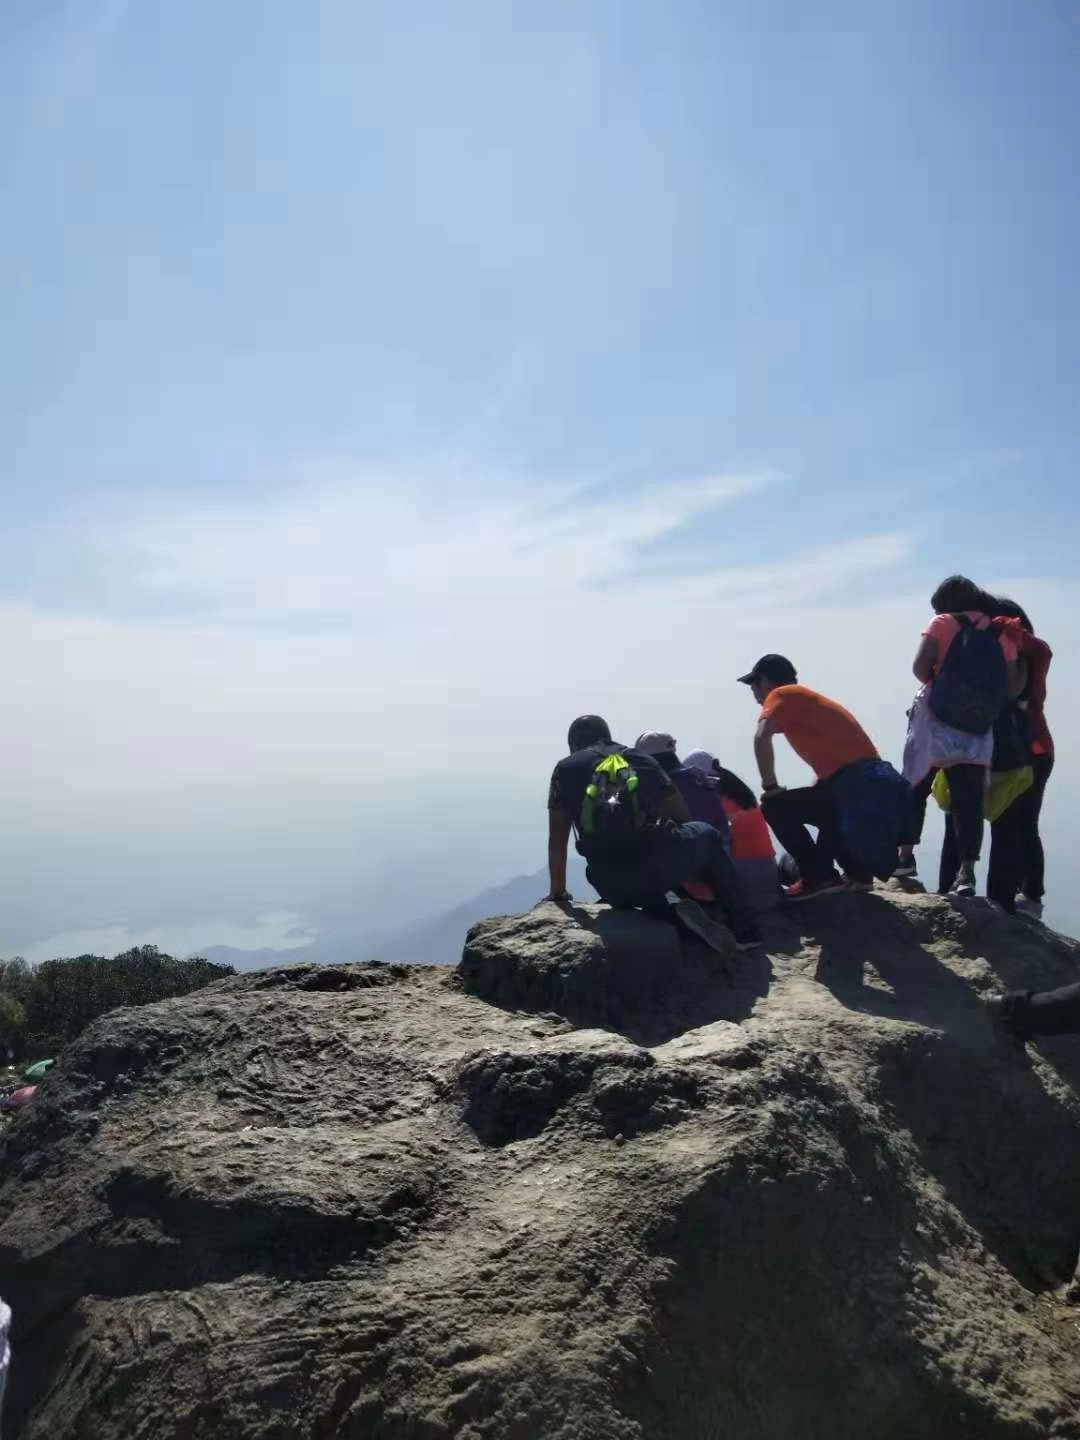 The peak of Wutong Mountain